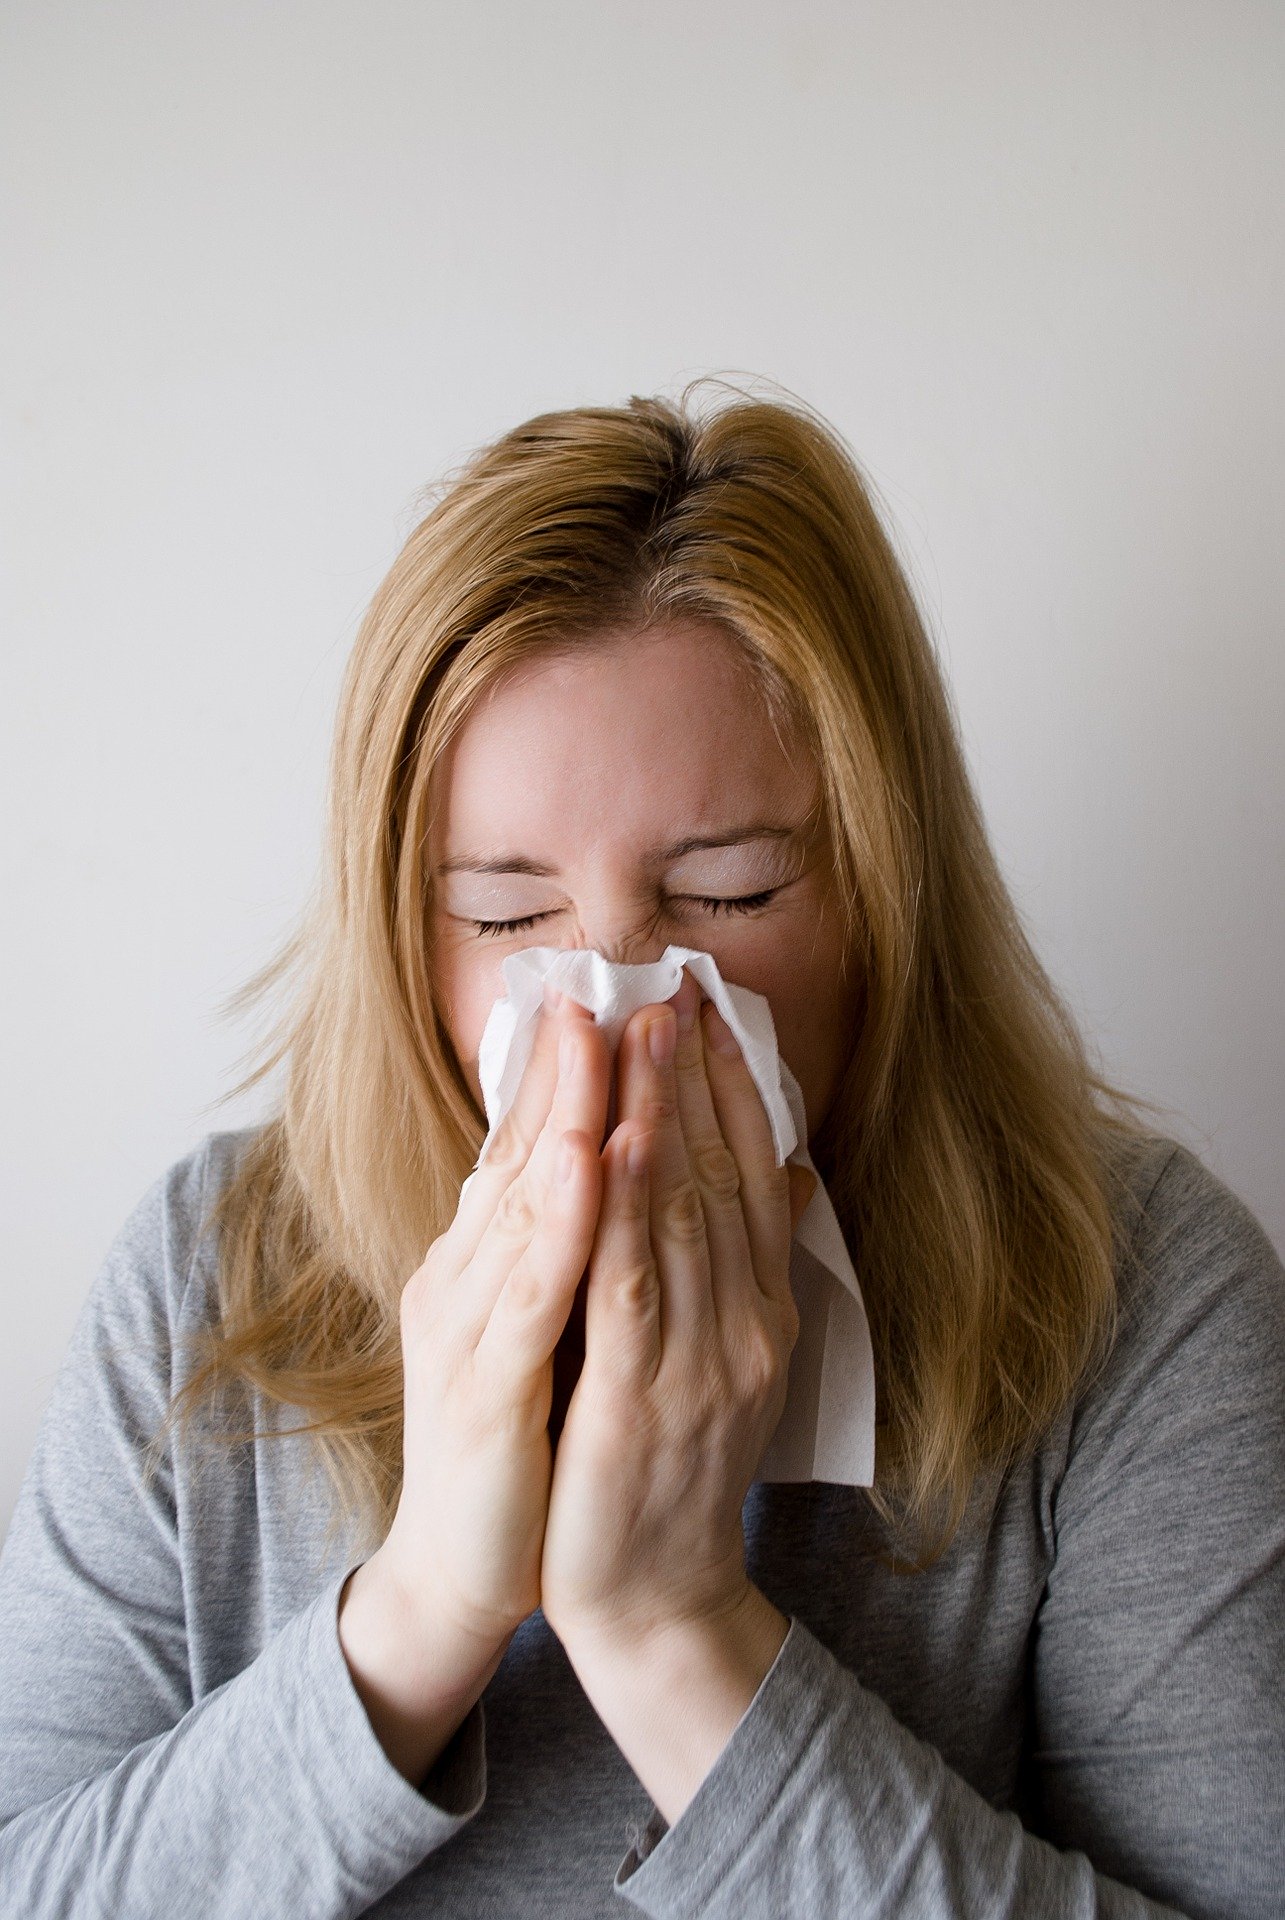 Allergia graminacee sintomi e cosa mangiare